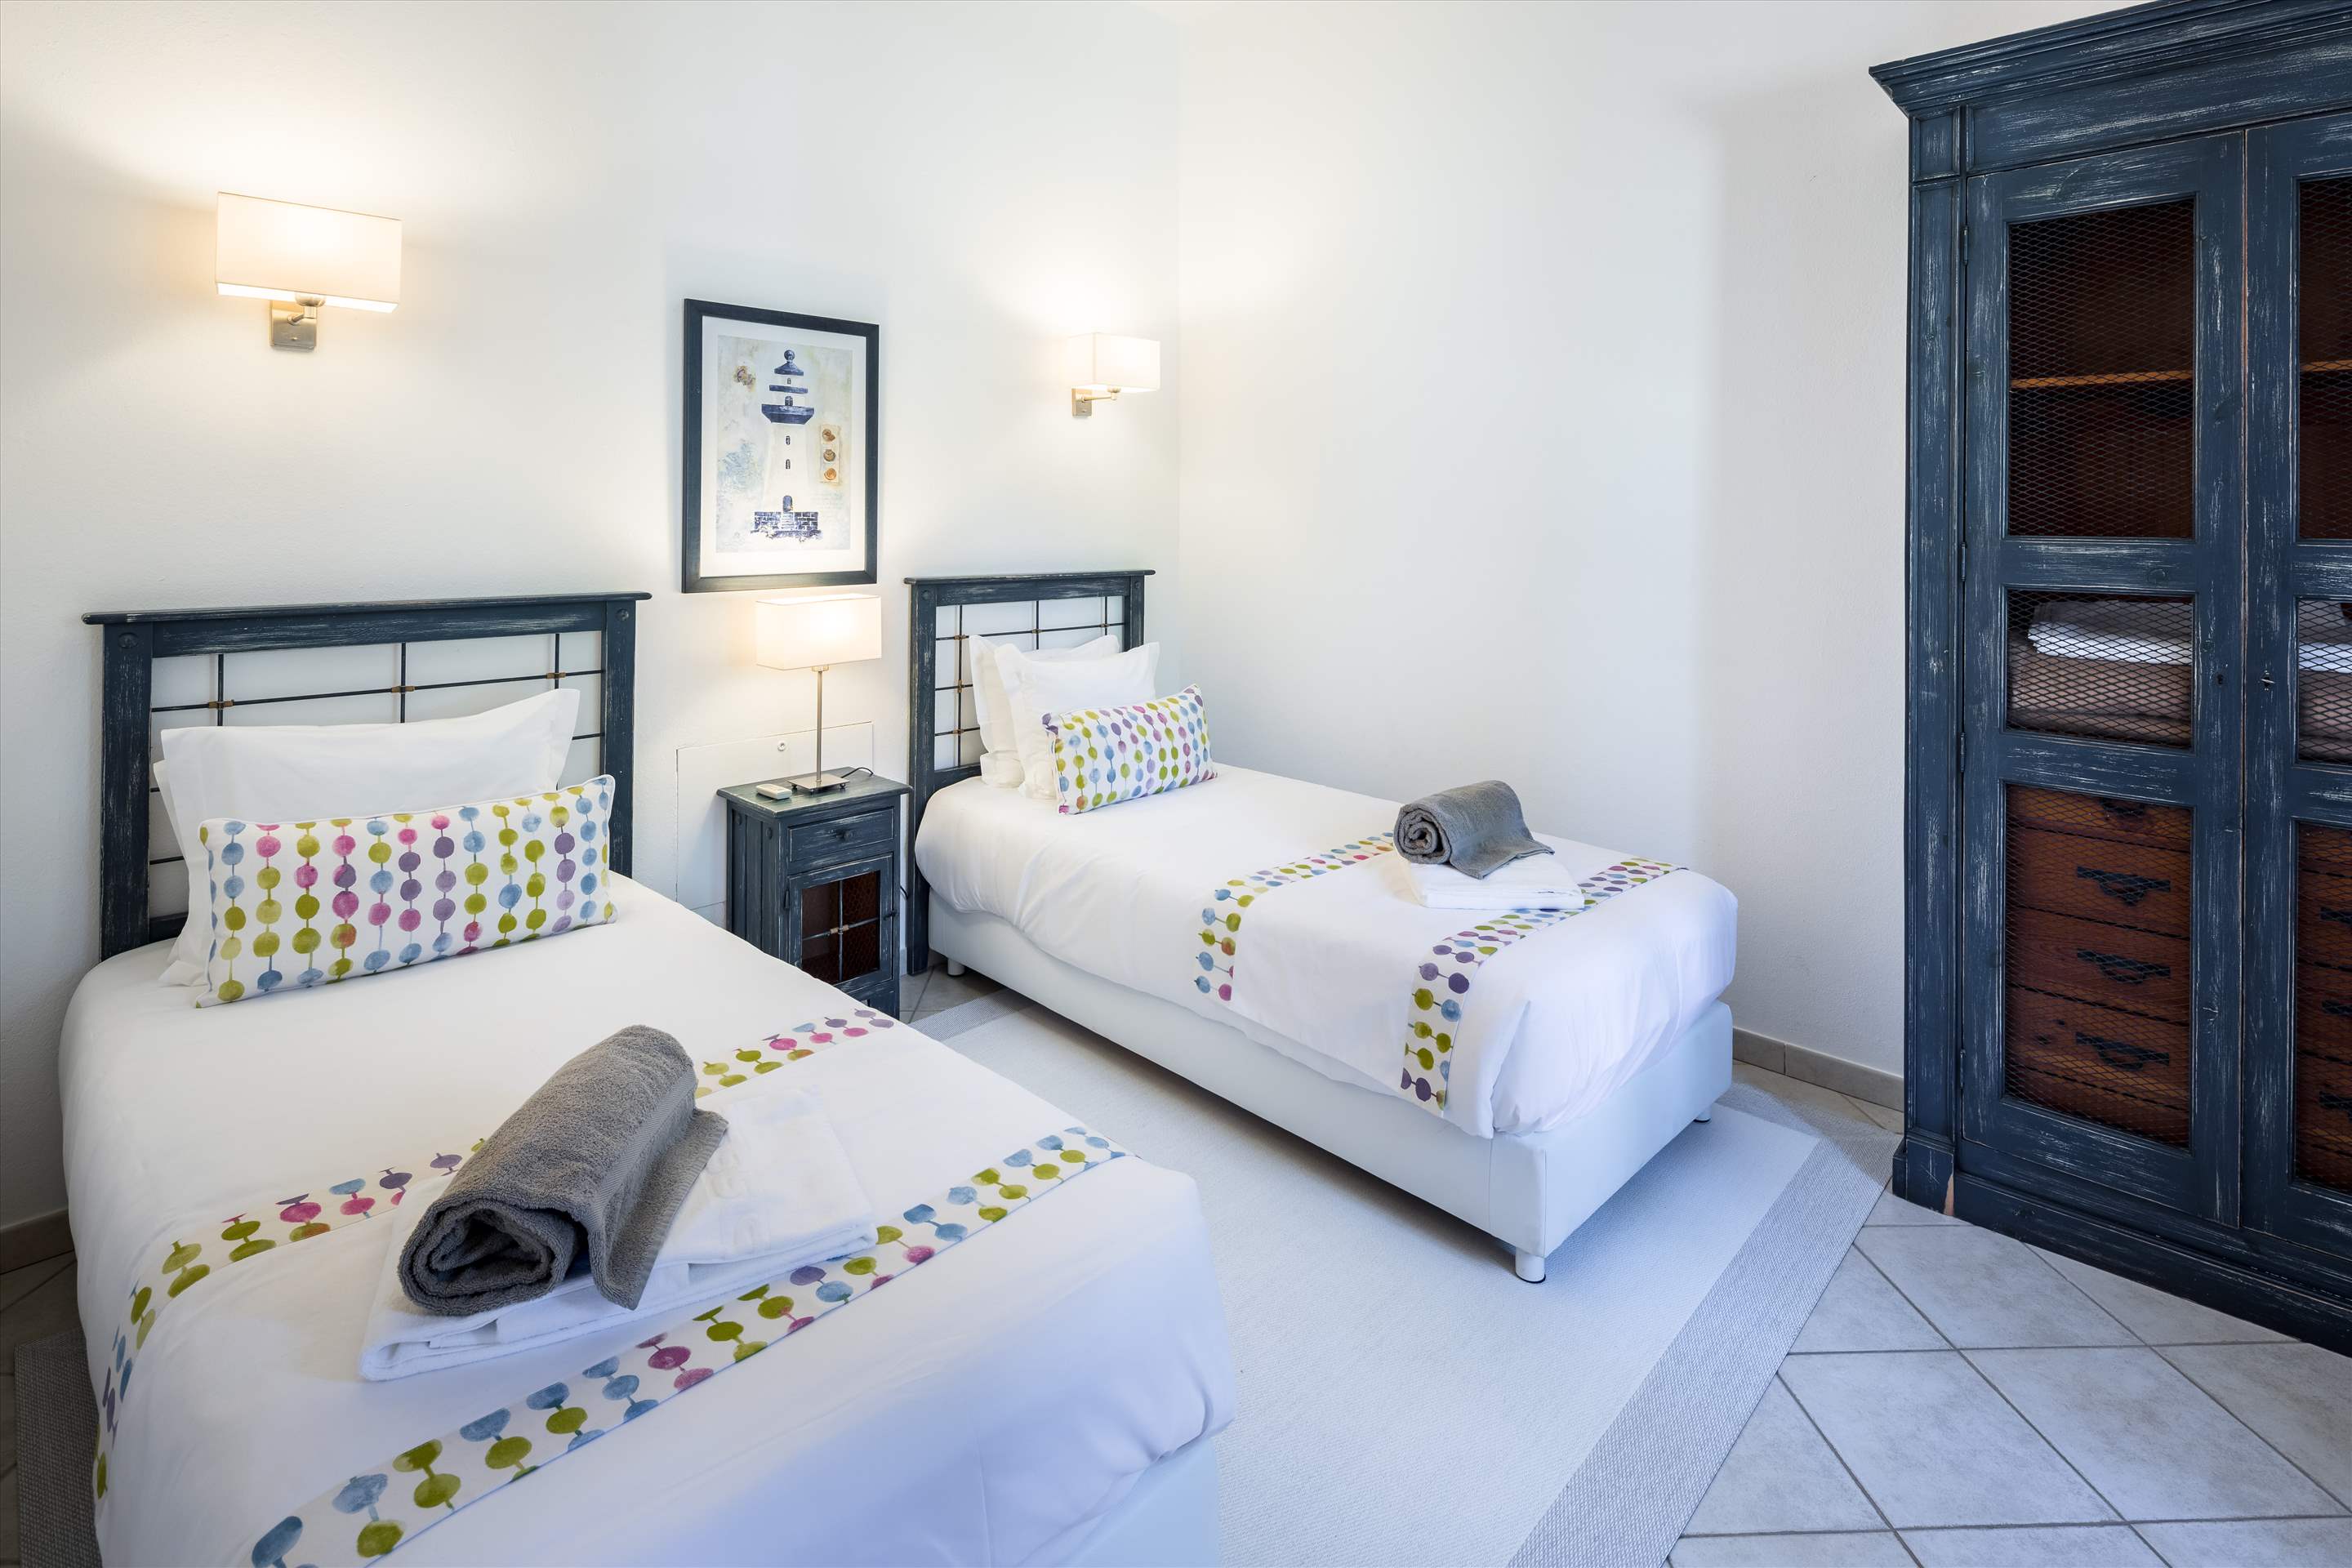 Casa do Ingles, up to 6 persons, 3 bedroom villa in Vilamoura Area, Algarve Photo #18